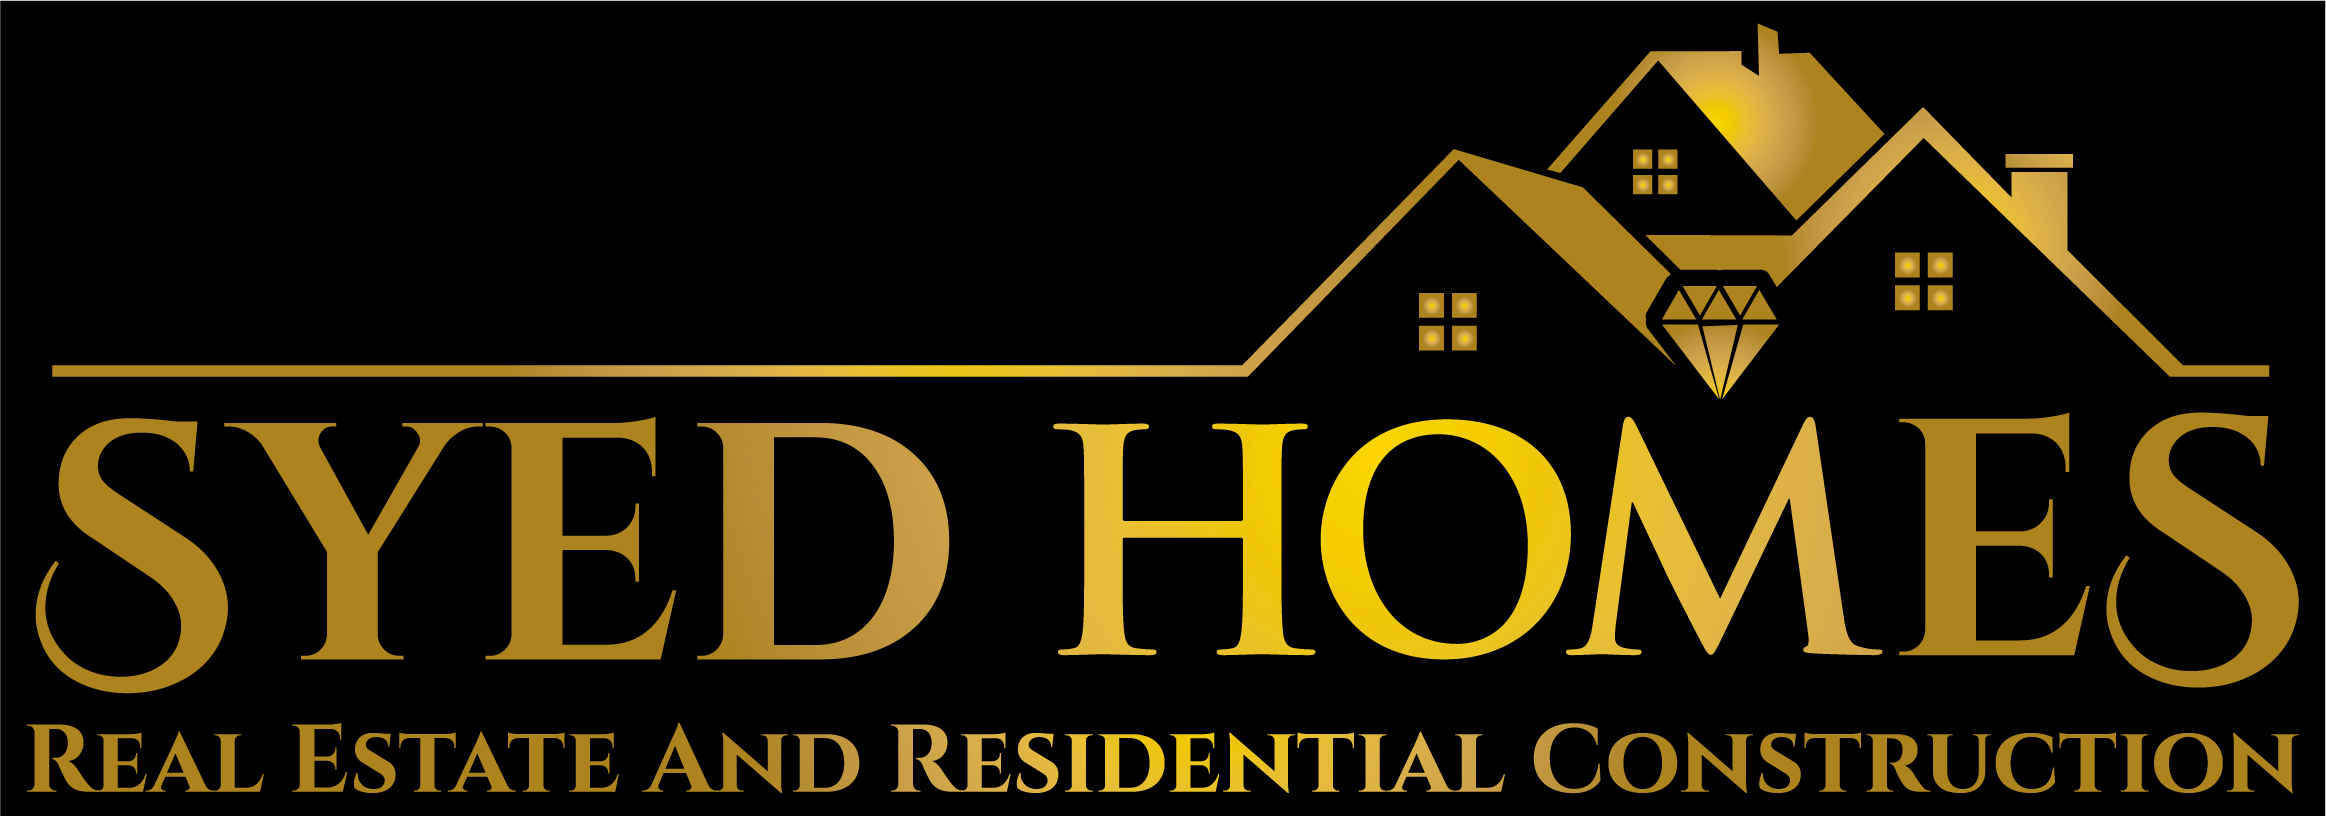 Syed Homes's logo